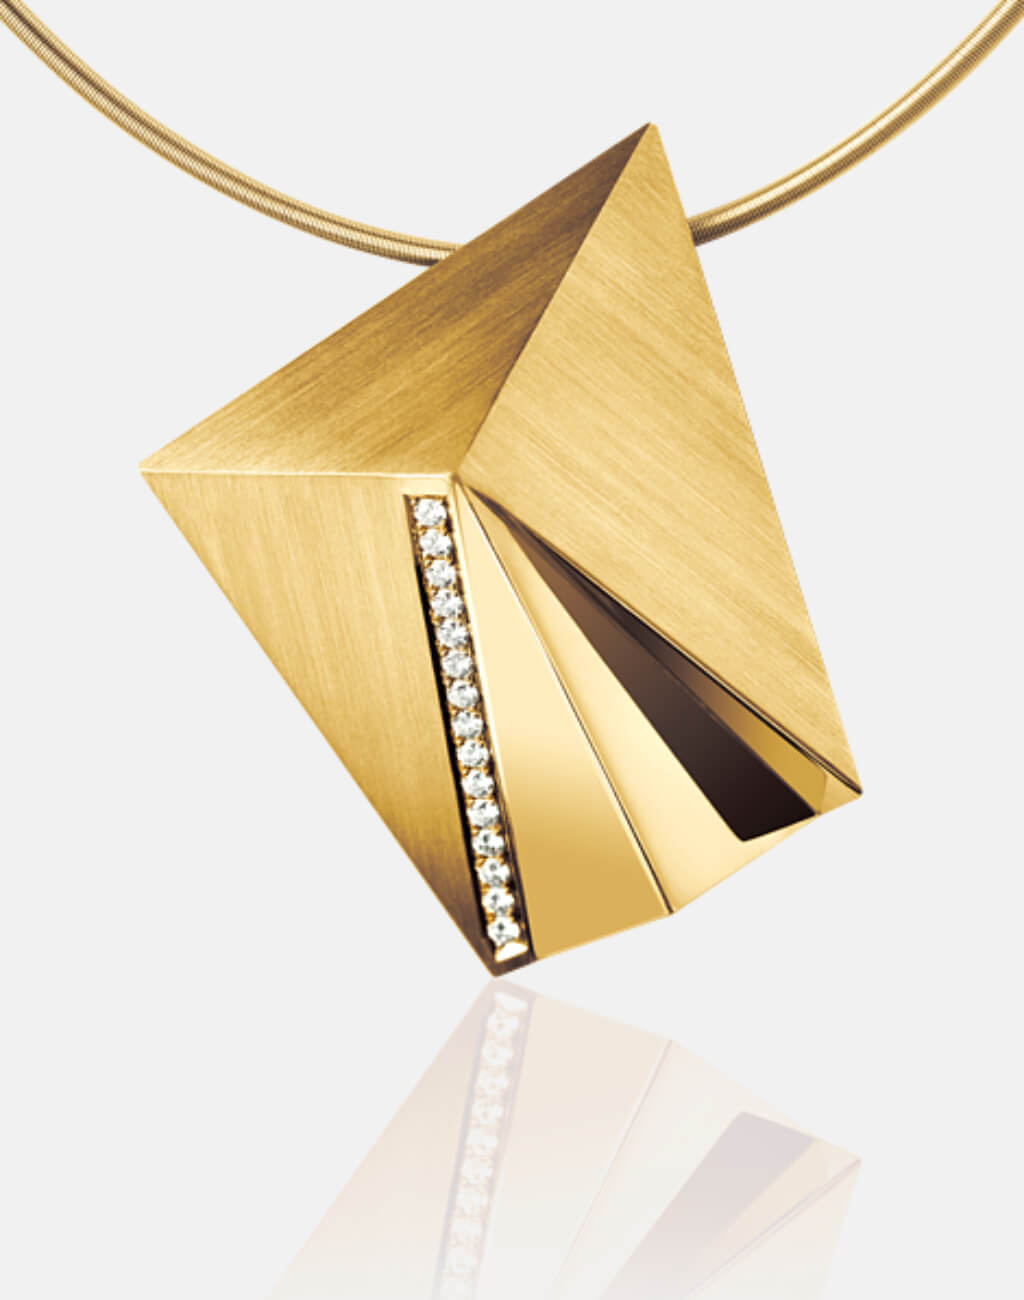 Cyllena | Collier, Kette, Kettenanhänger - 750 Gelbgold, Diamanten-Brillanten | necklace, pendant - 18kt yellow gold, diamonds | SYNO-Schmuck.com